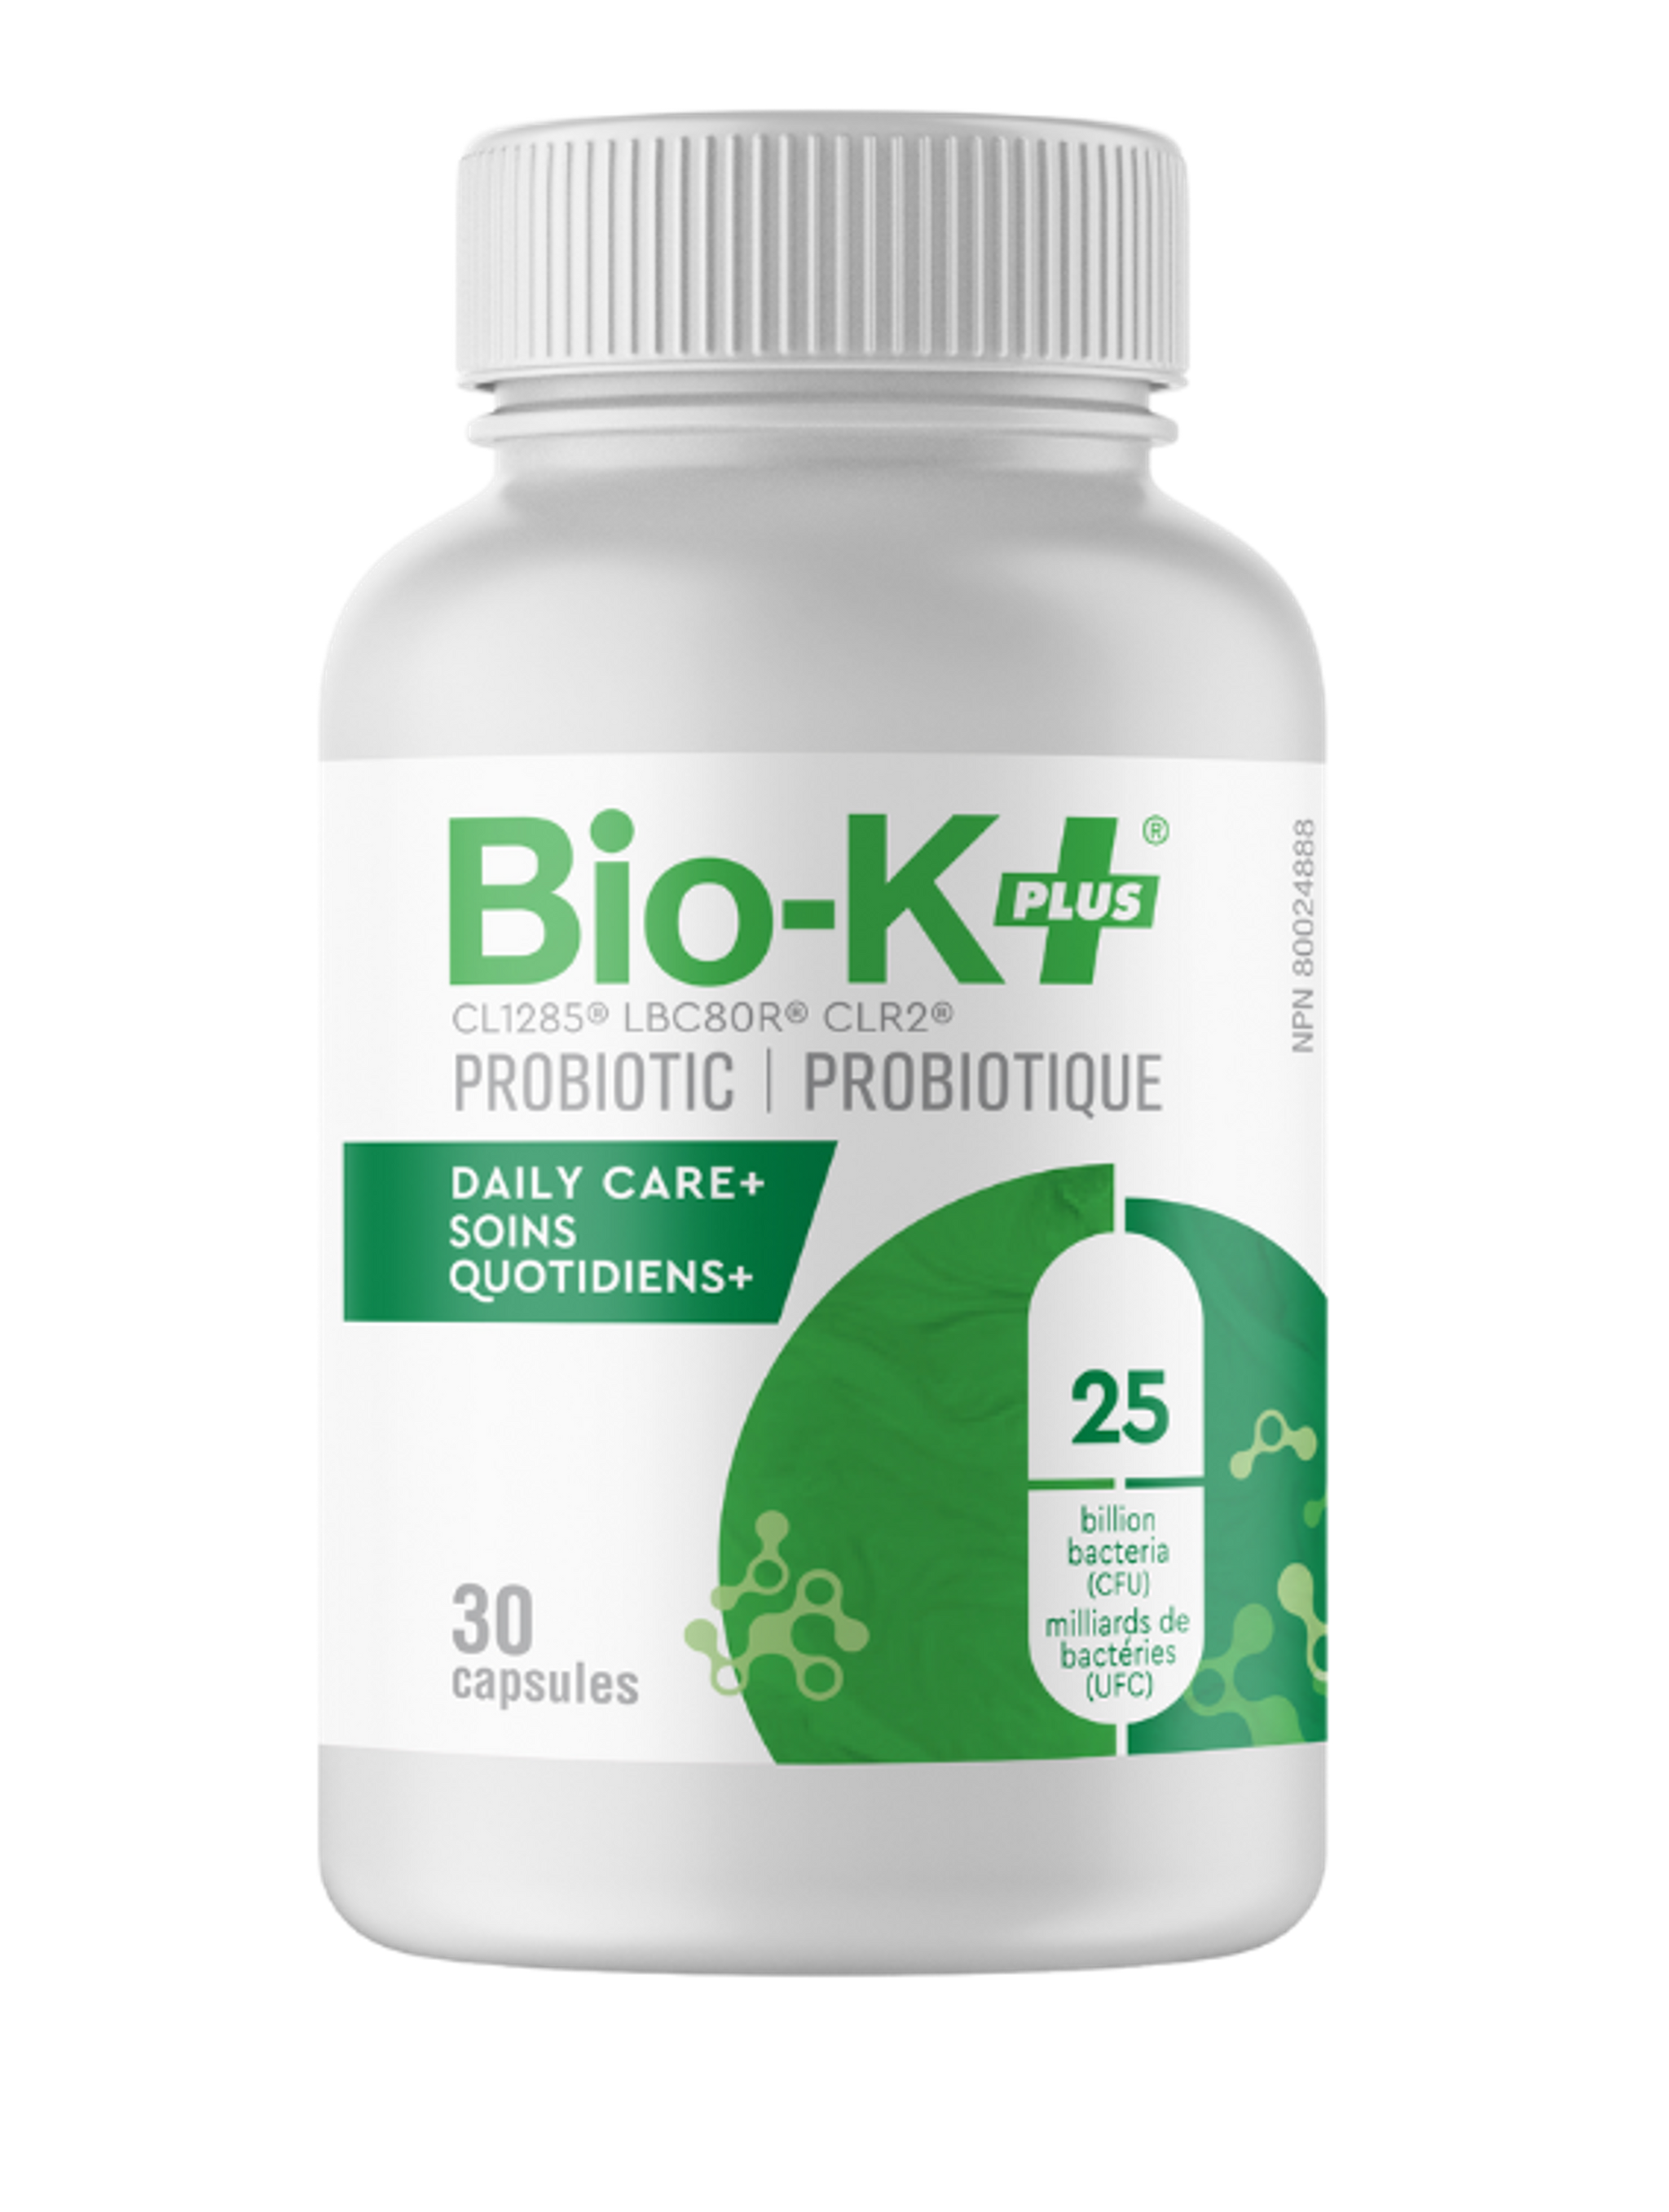 Bottle of probiotics Capsules - Bio-K+ Daily Care+ 25 Billion